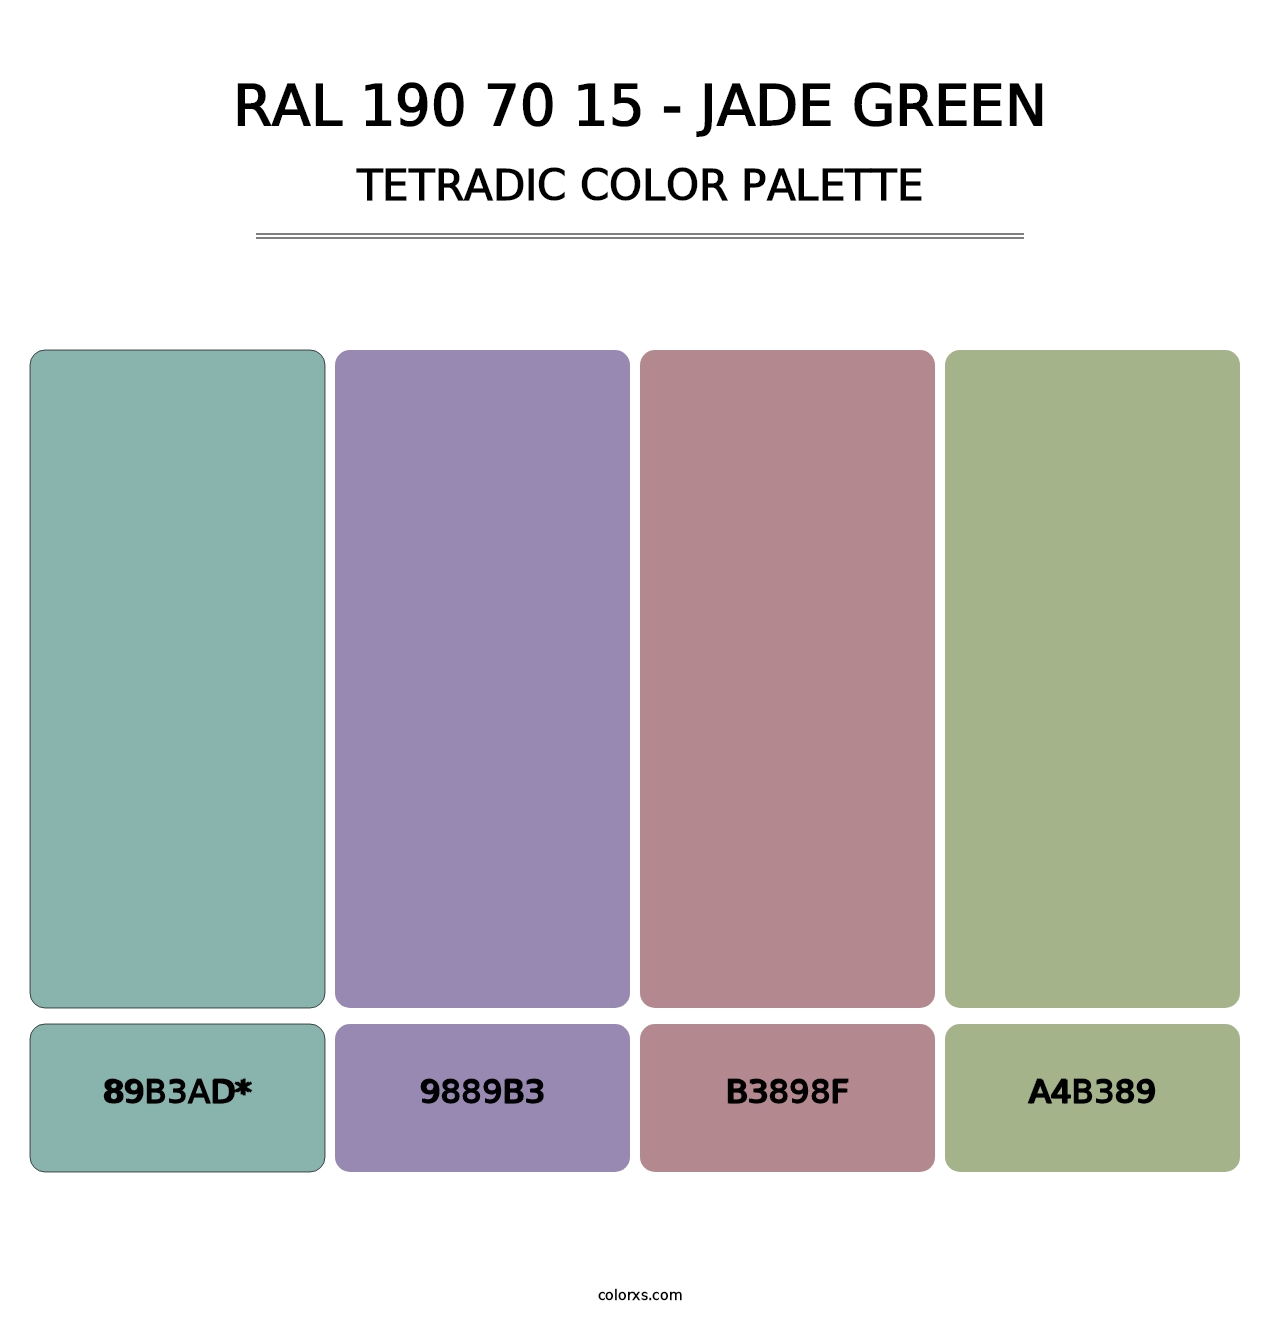 RAL 190 70 15 - Jade Green - Tetradic Color Palette